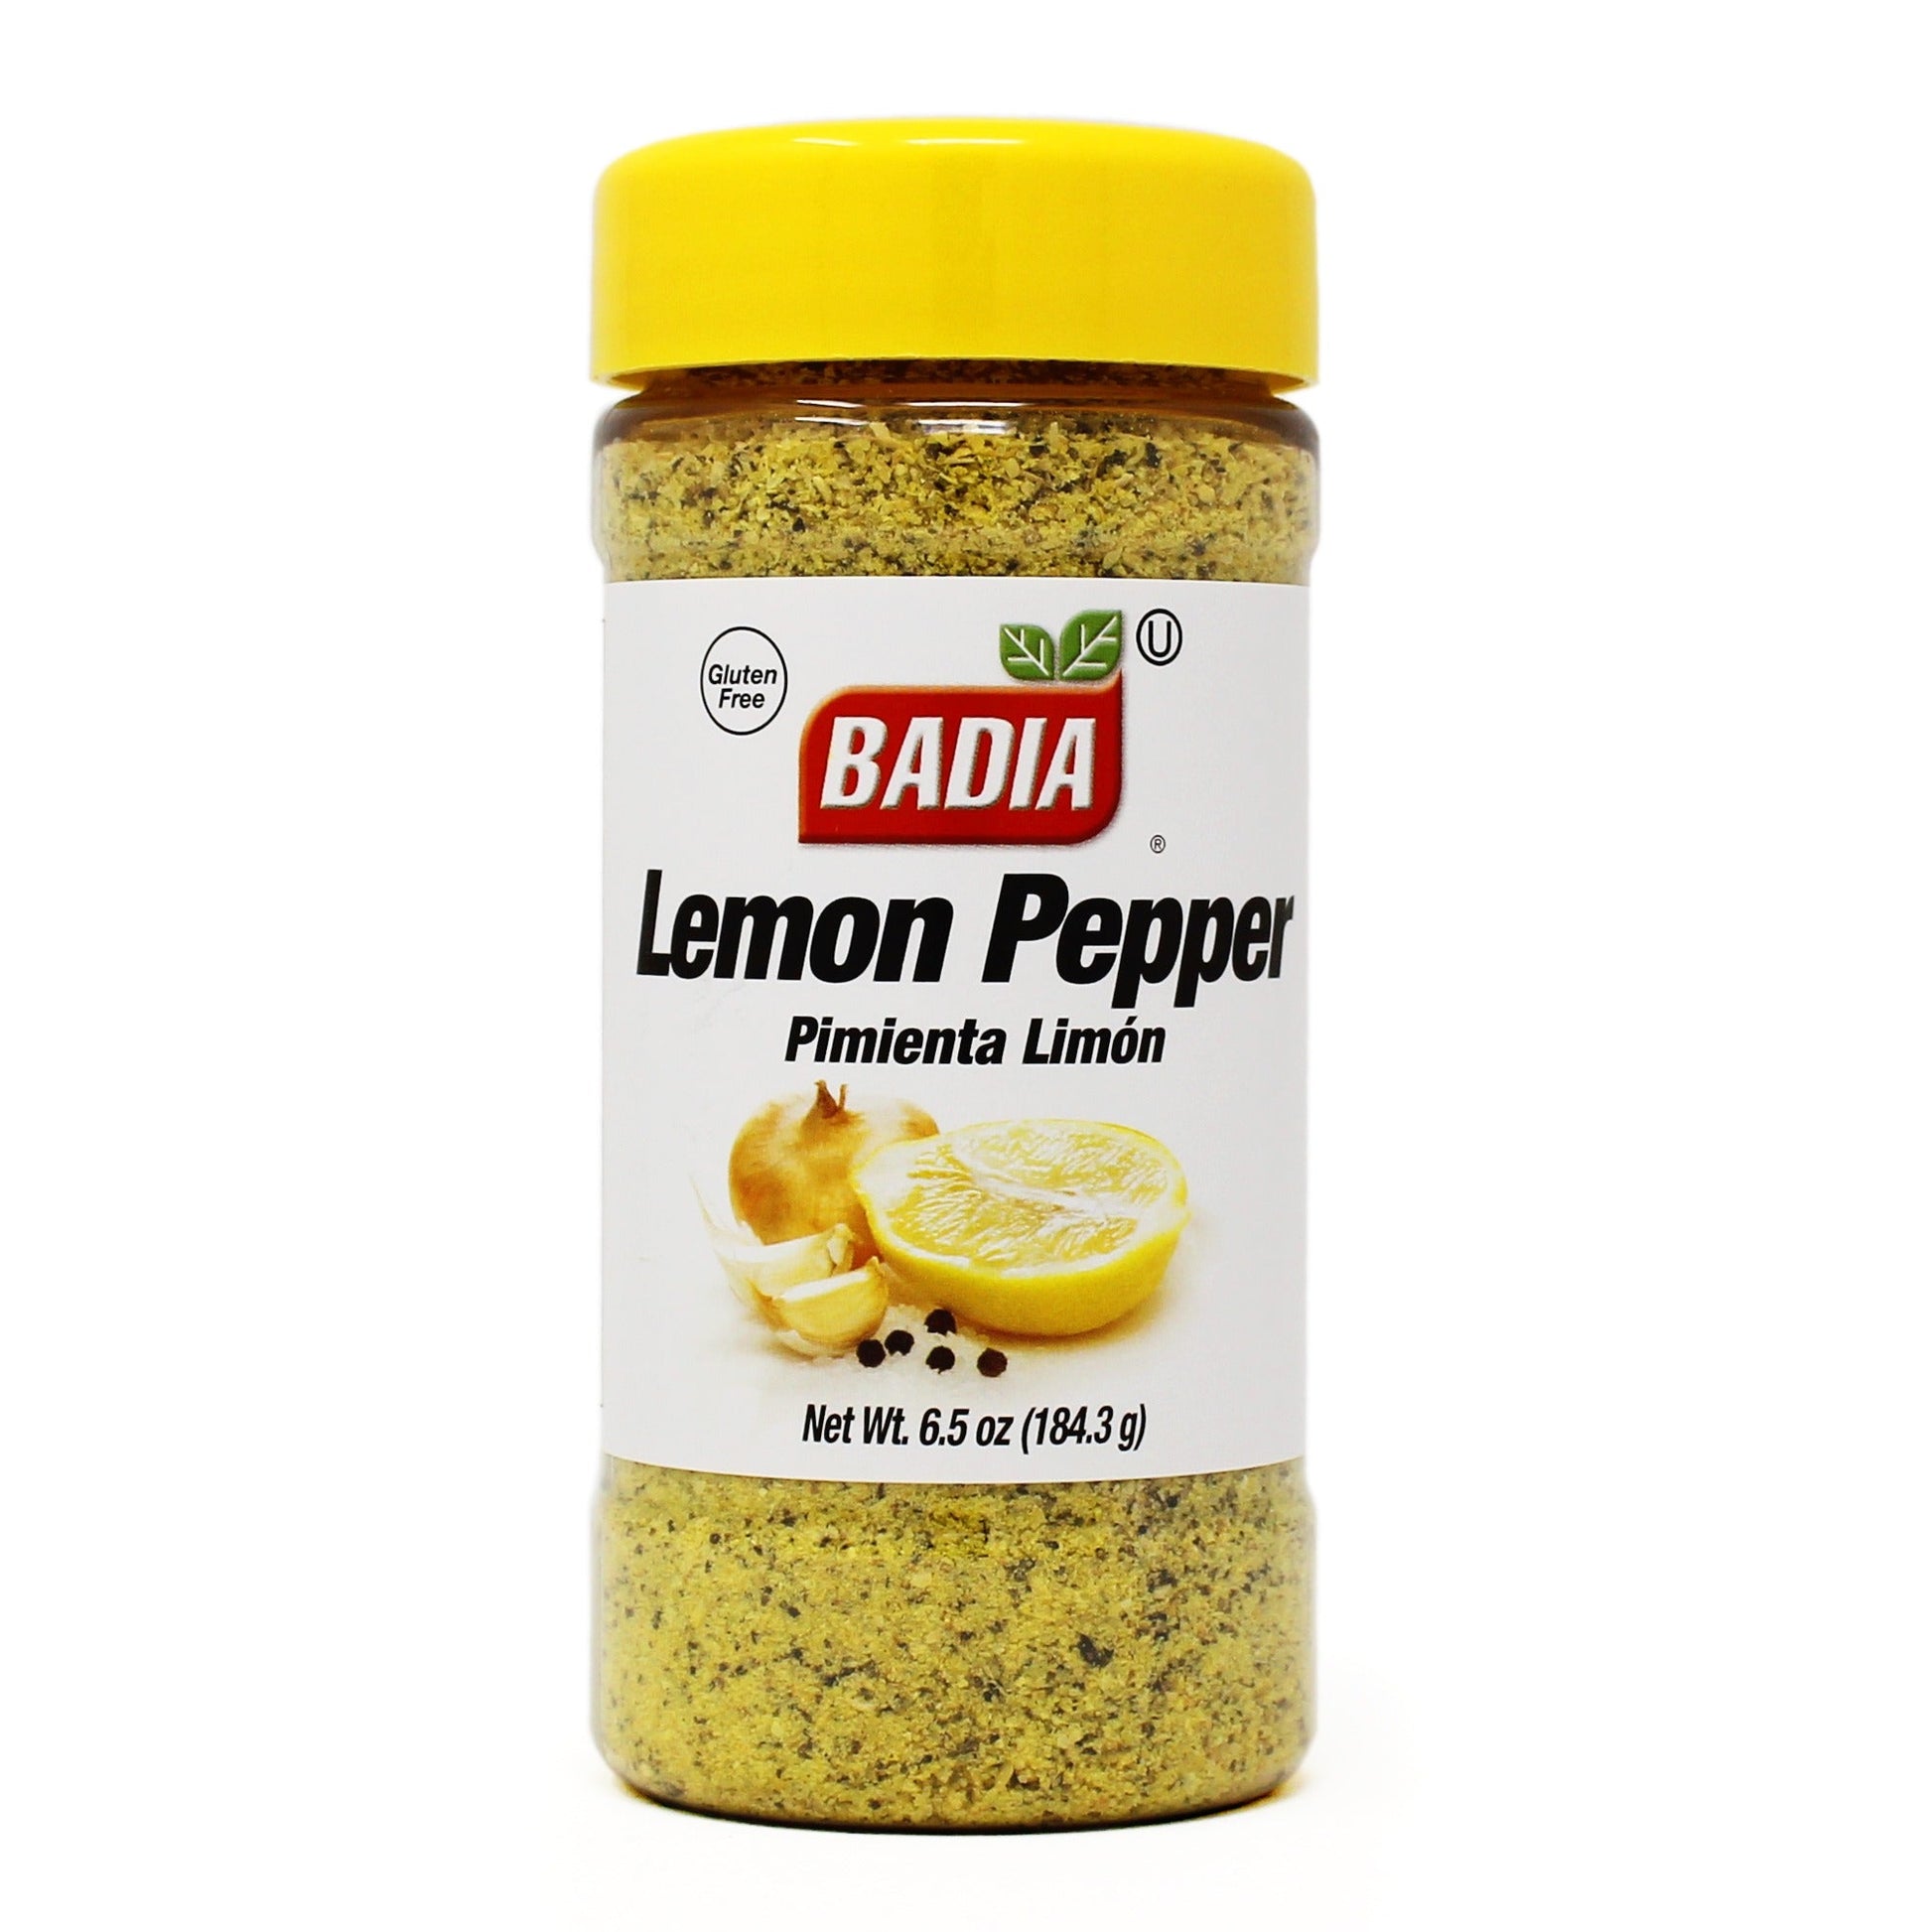 Badia Orange Pepper 6.5 Oz 